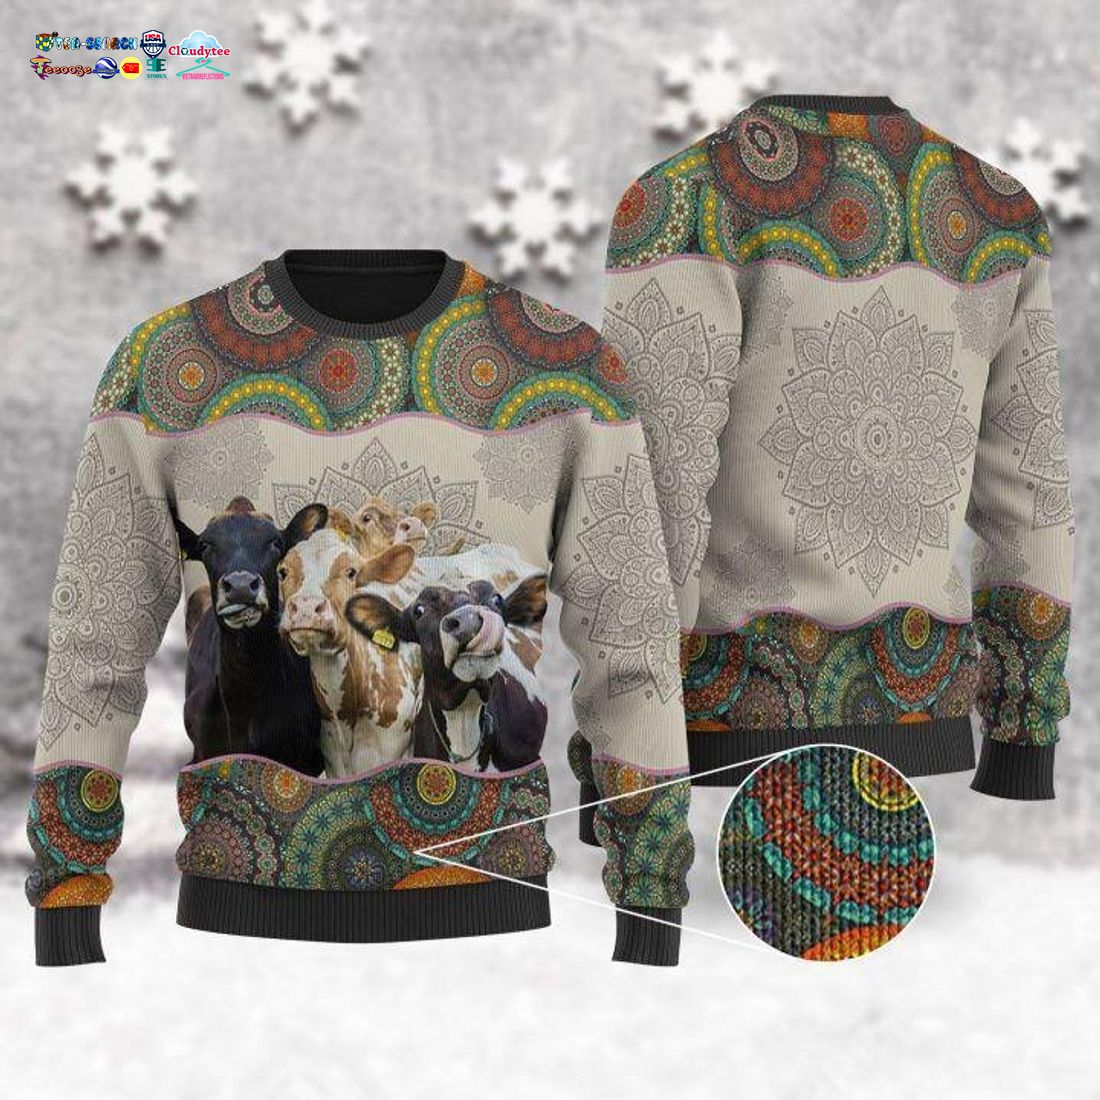 Cows Mandala Ugly Christmas Sweater - Hey! You look amazing dear